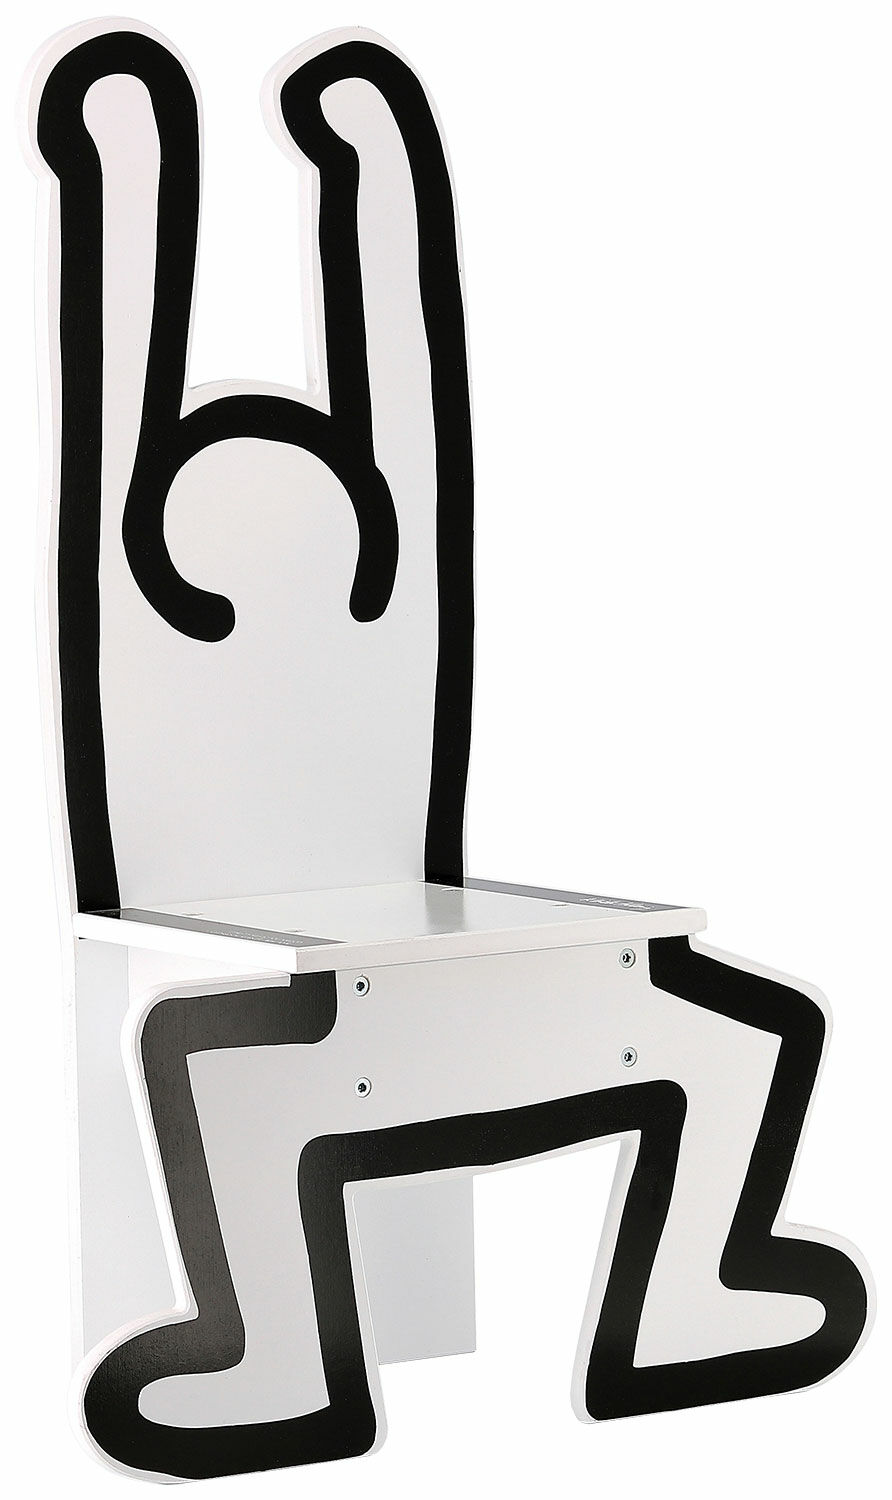 Children's chair "Keith Haring", white version